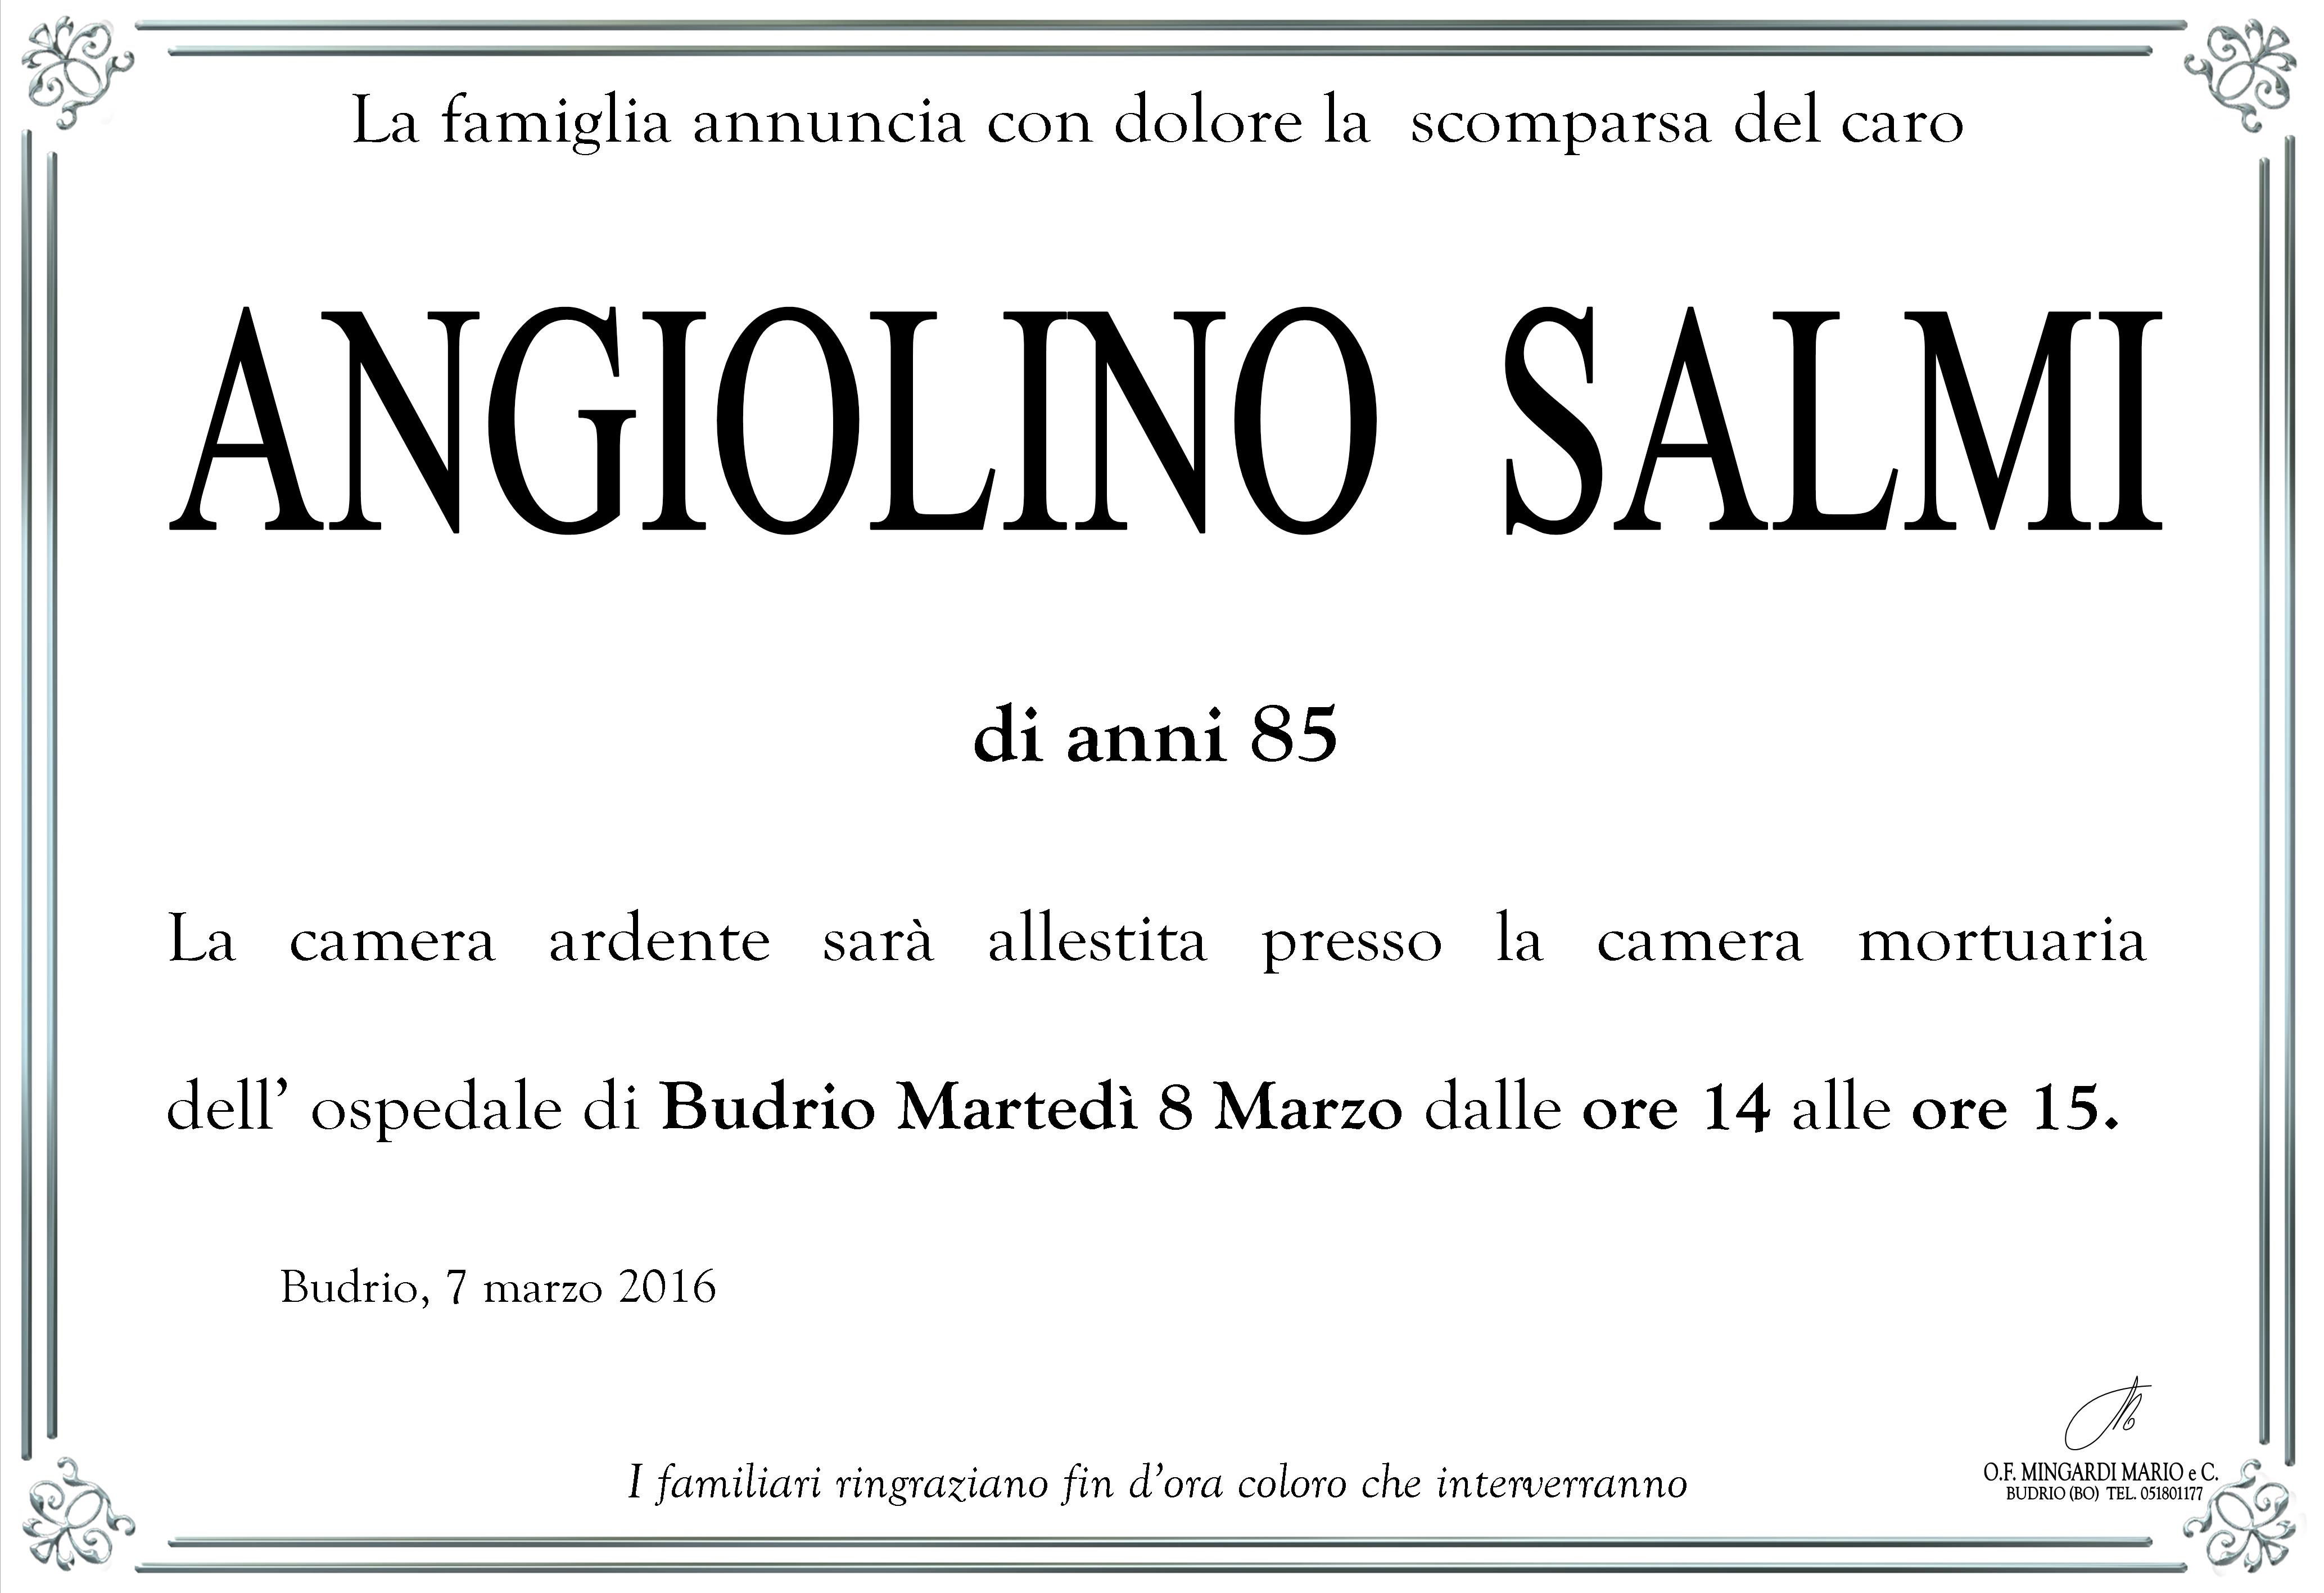 Angiolino Salmi manifesto